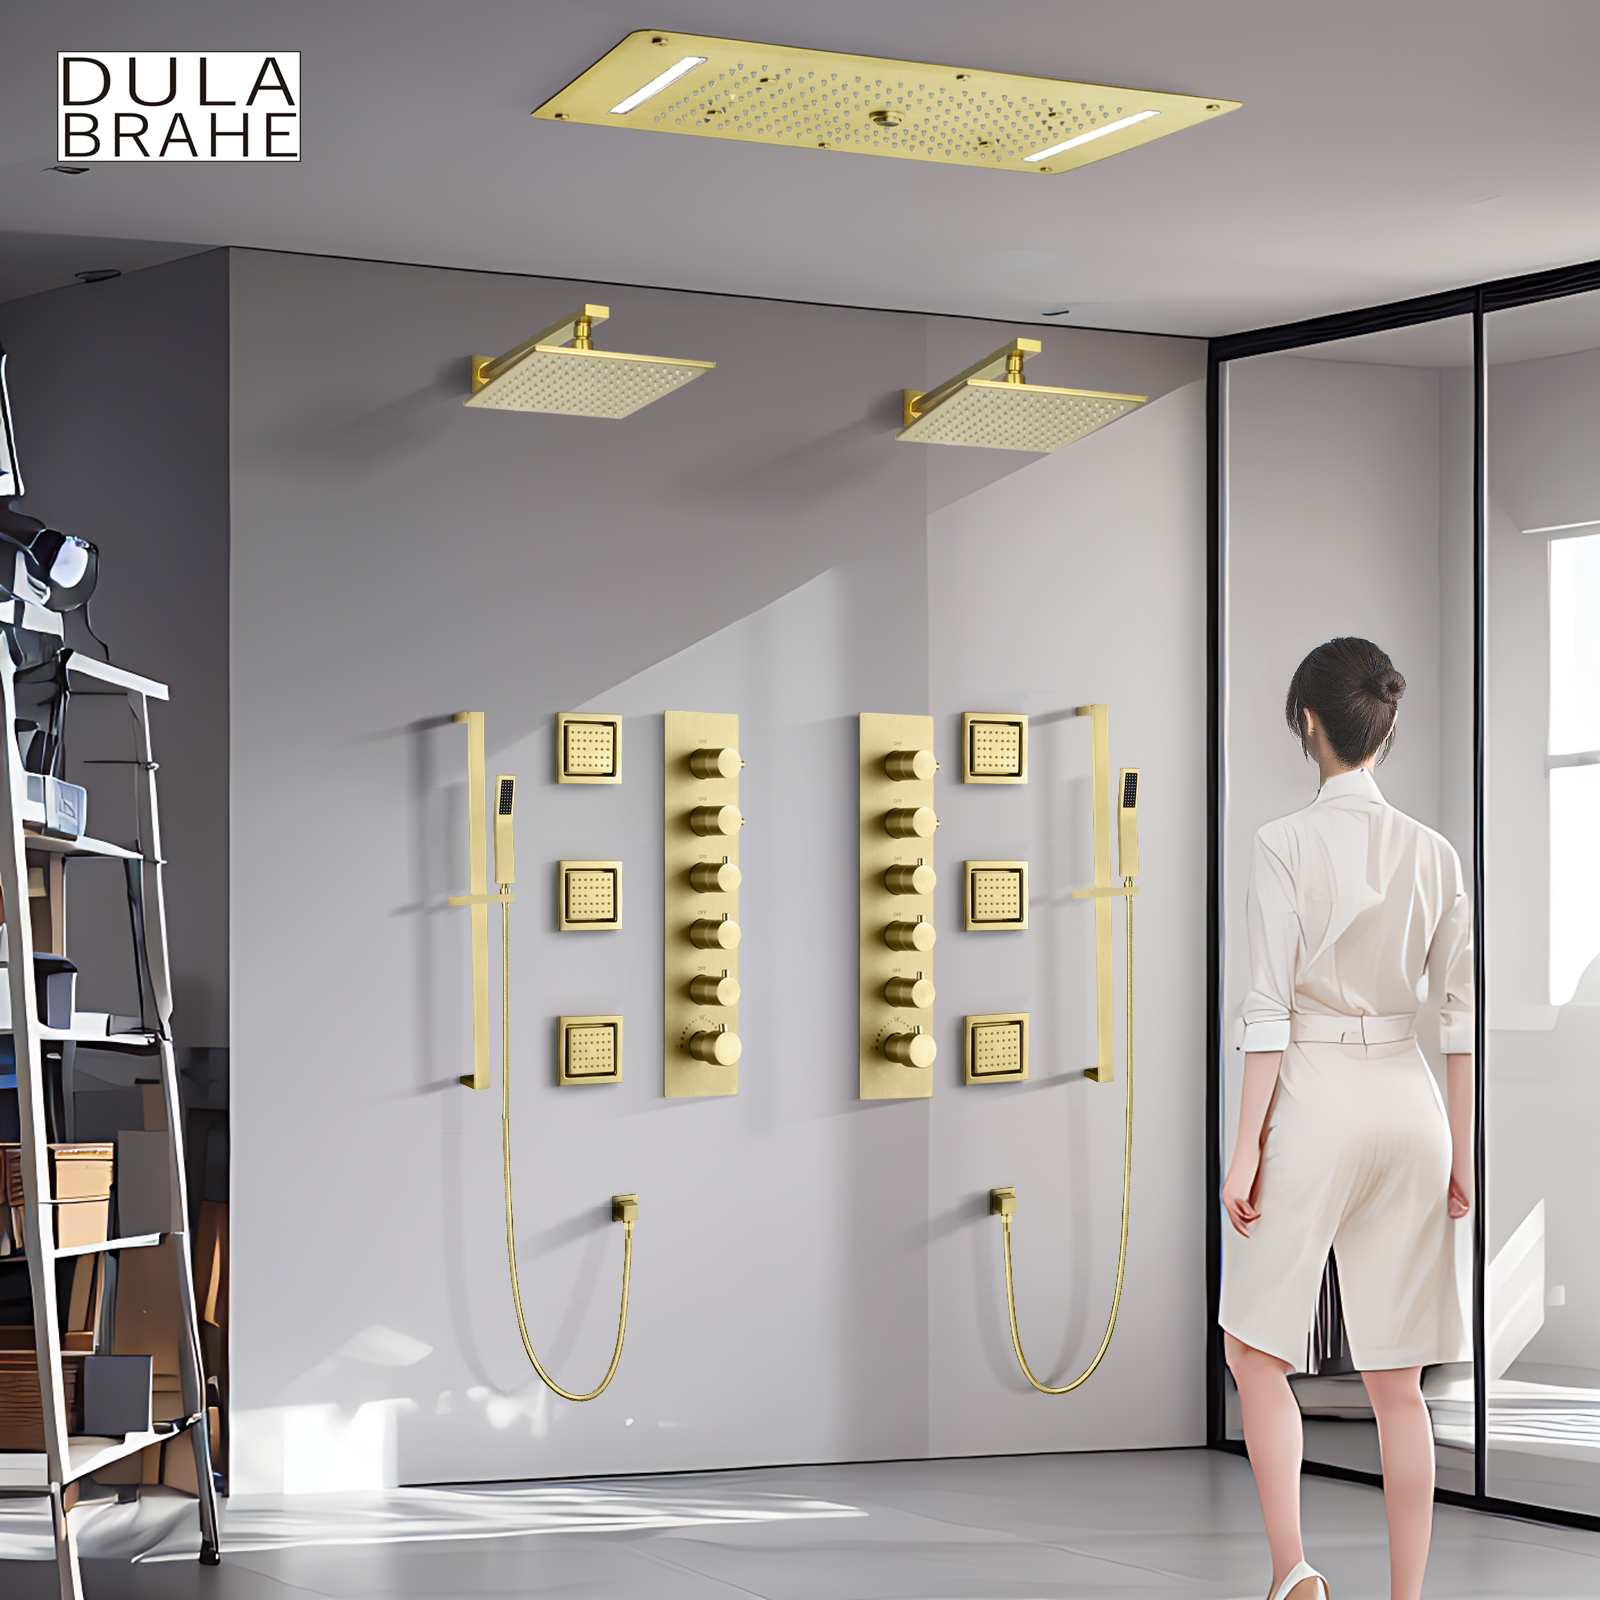 Ultra -large Flow LED Modern Bathroom Ceiling Rainfall Waterfall Shower System Brass Shower Faucet